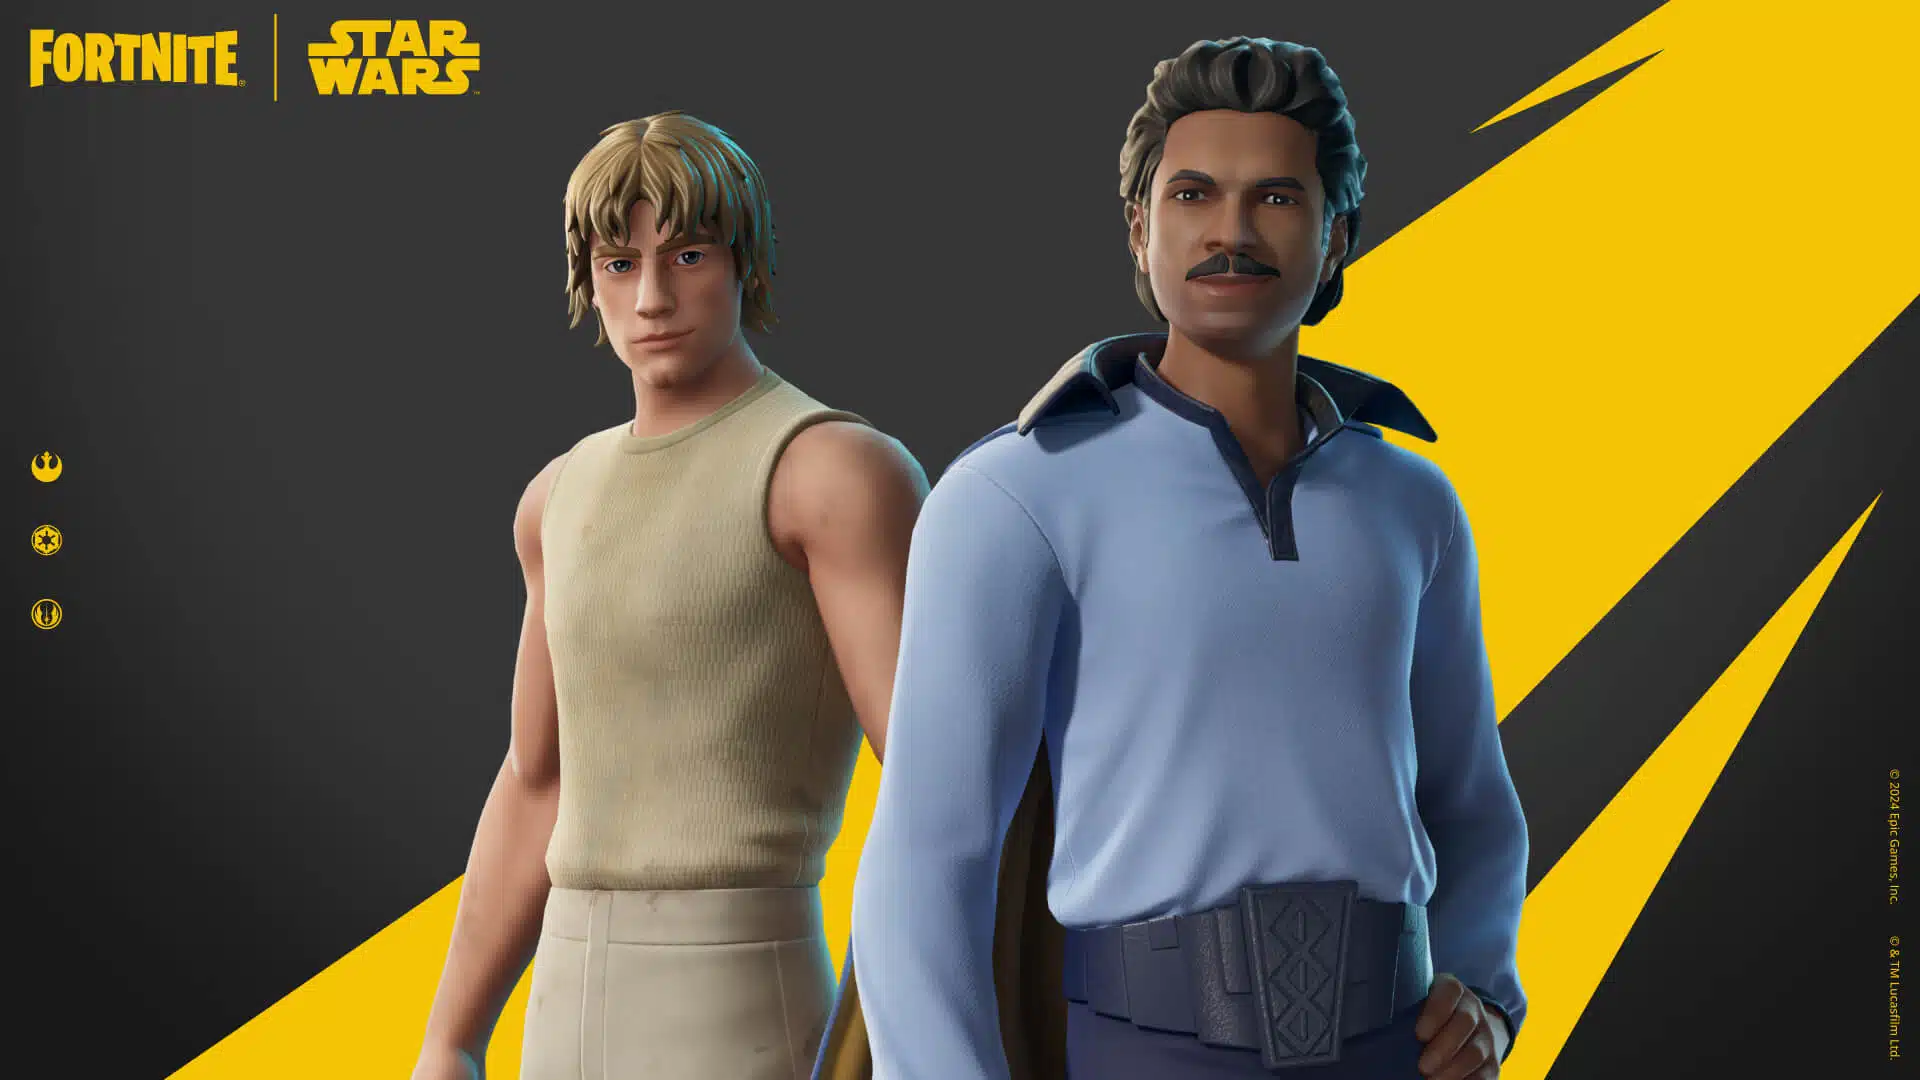 Fortnite Star Wars Skins - Lando and Luke